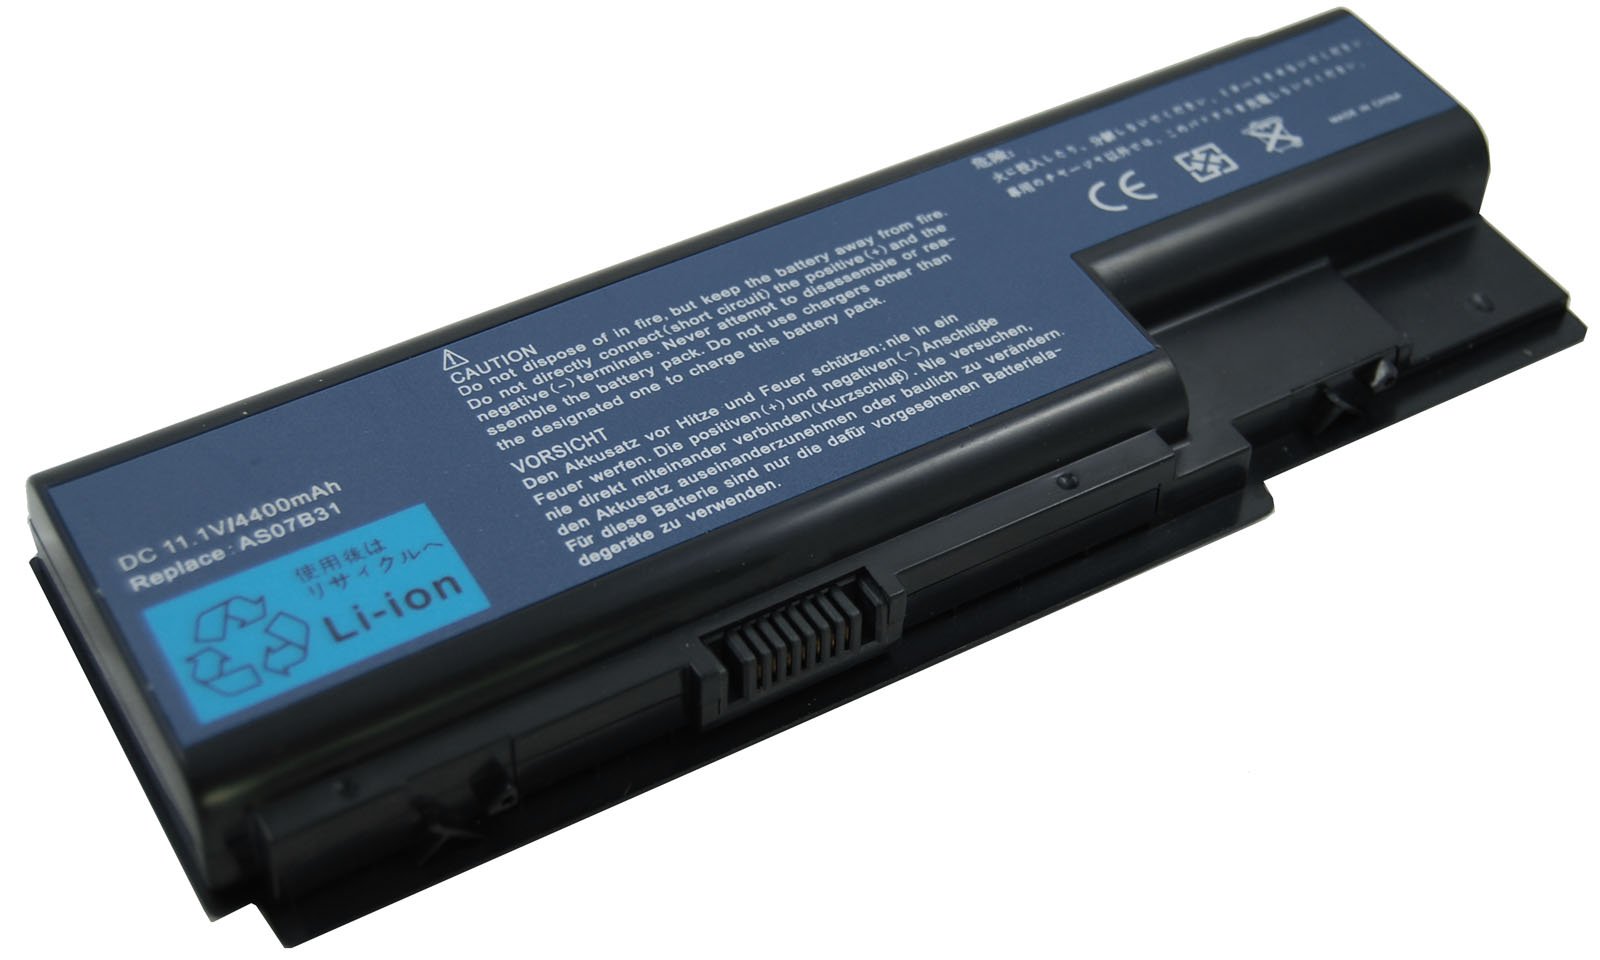 Wipro Laptop battery repair/replacement